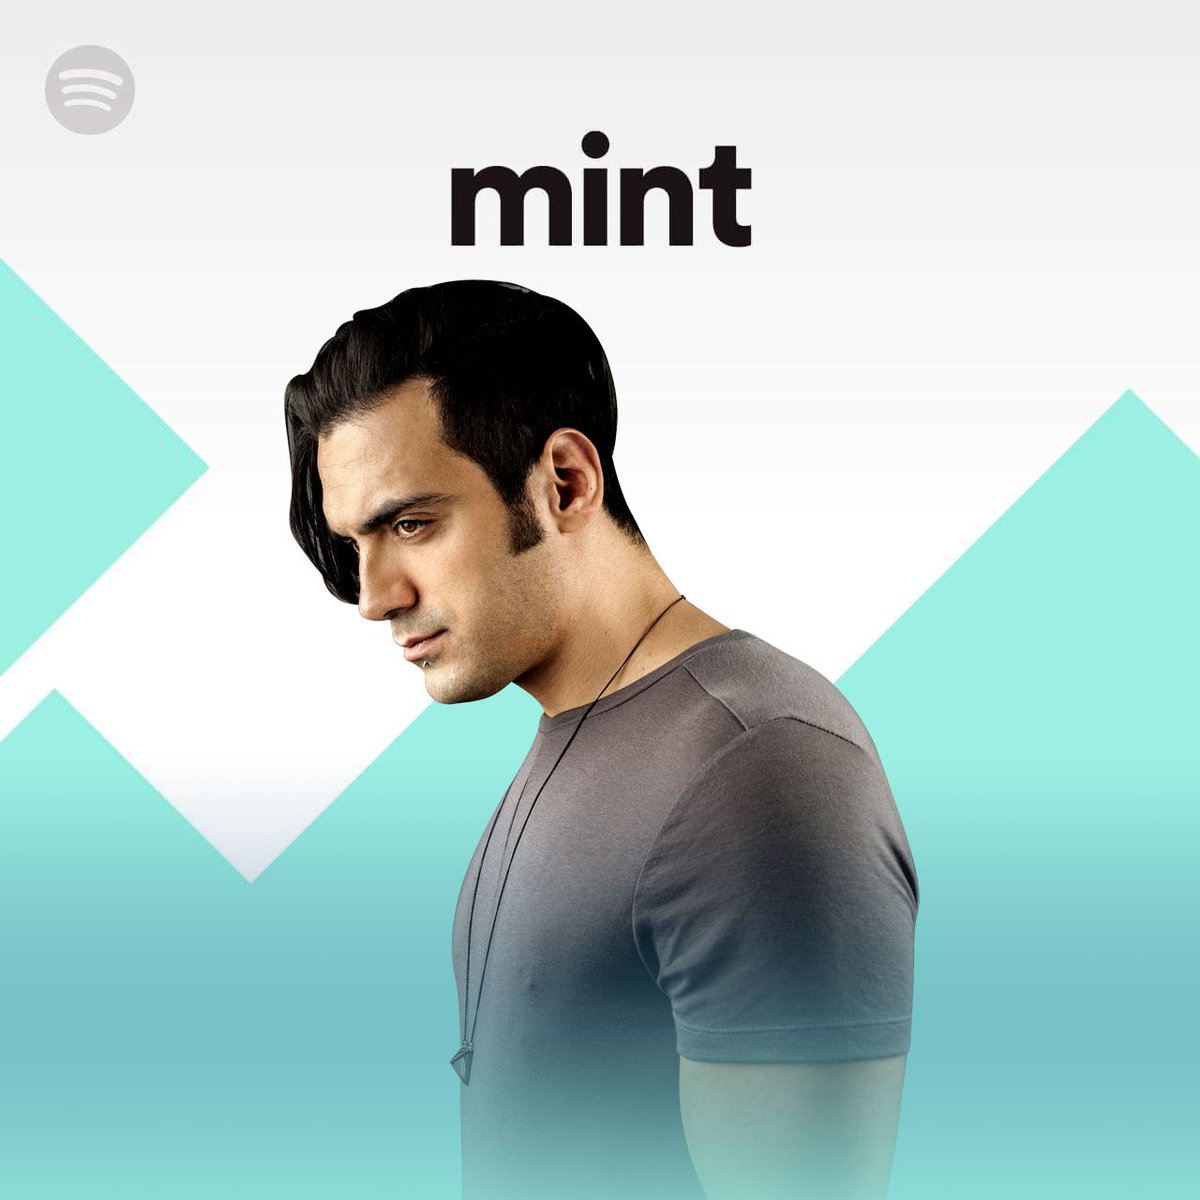 Higher added to the Mint Playlist! spoti.fi/2rxEfhX @lucasandsteve Thanks @Spotify @austinkramer https://t.co/zT3O13ScC4